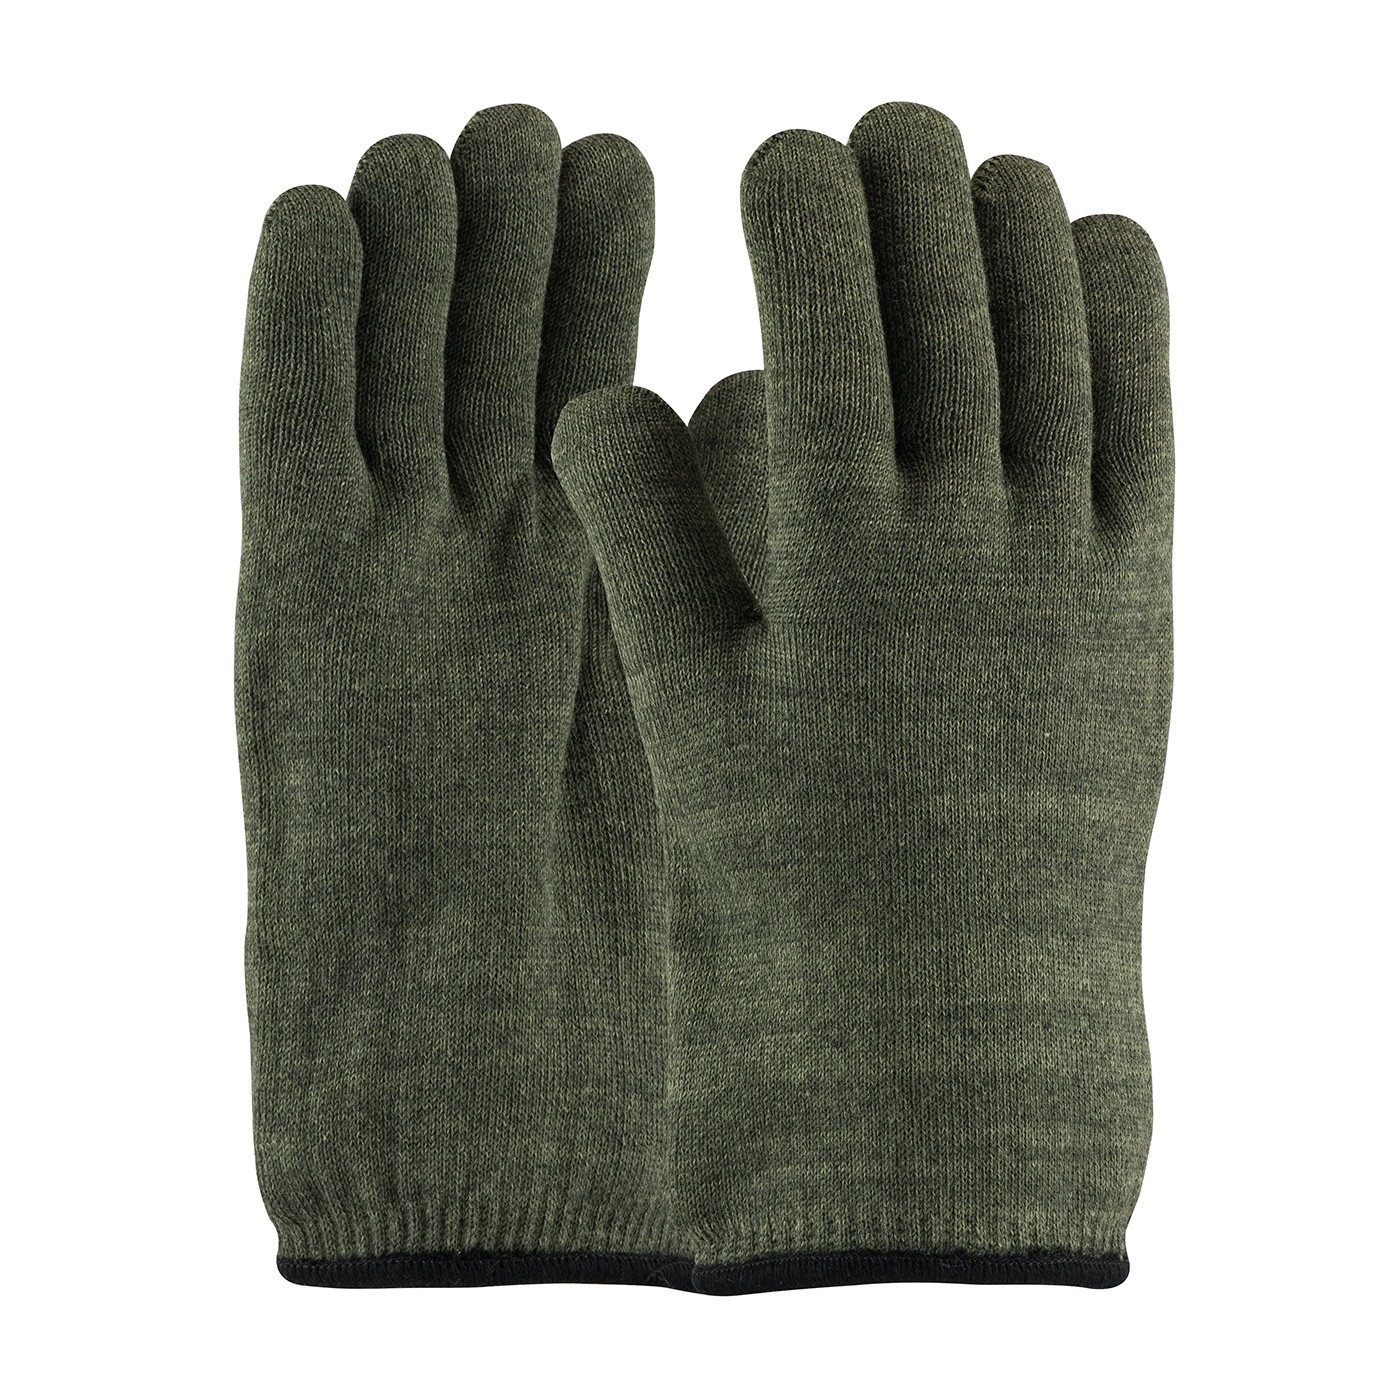 Kut Gard® Kevlar® / Preox Seamless Knit Hot Mill Glove with Cotton Liner - 32 oz  (#43-850)